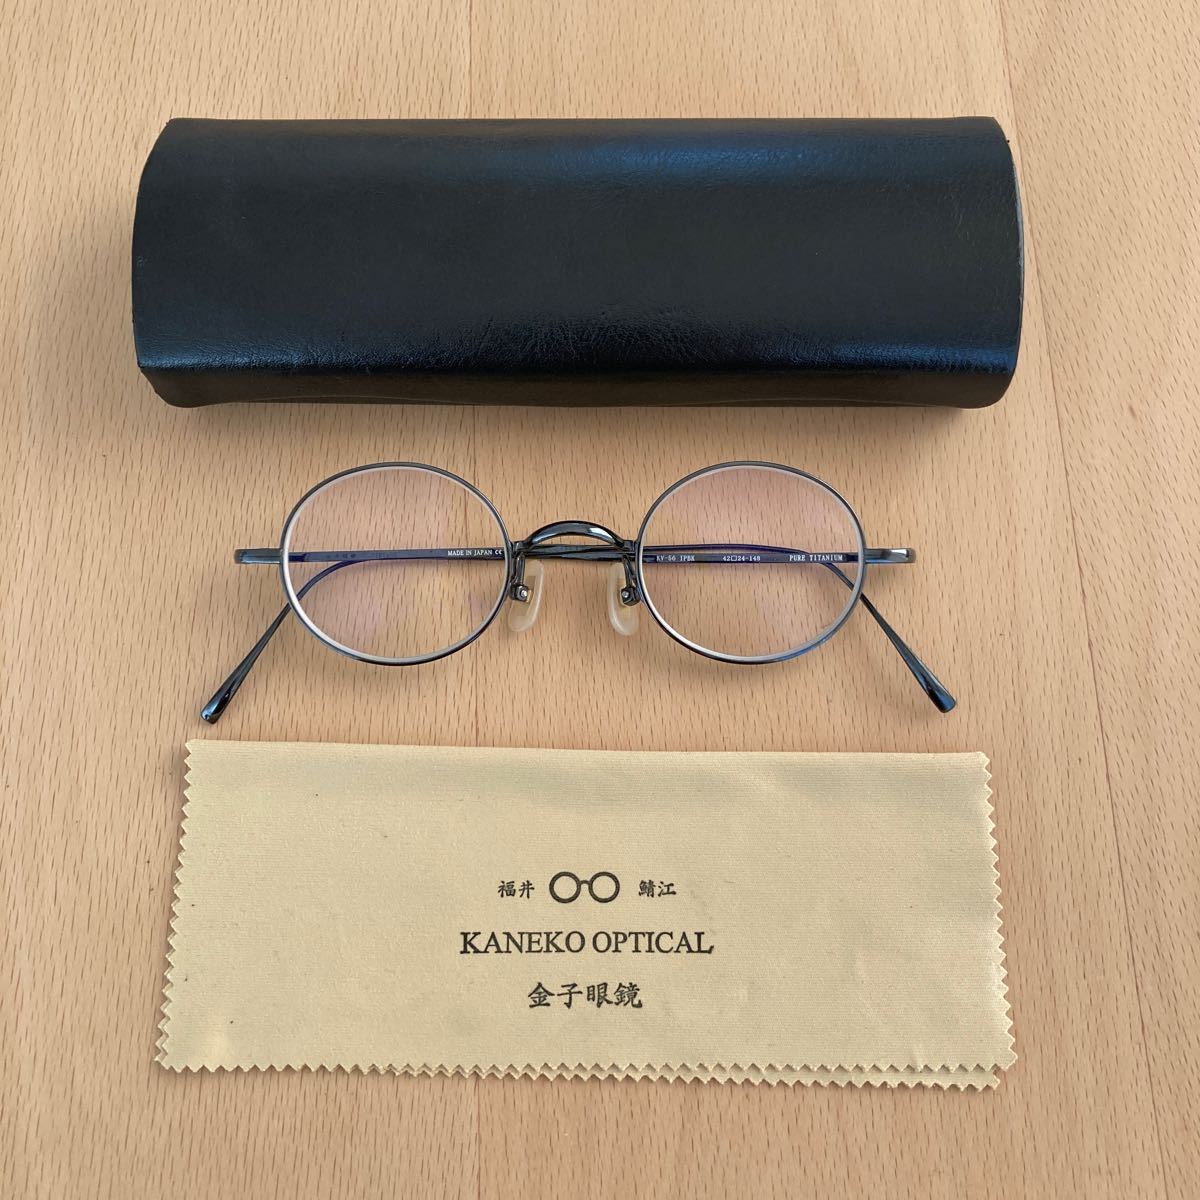 金子眼鏡 KV-56 定価39,600円 極美品 日本製 福井 鯖江眼鏡 ビンテージ 